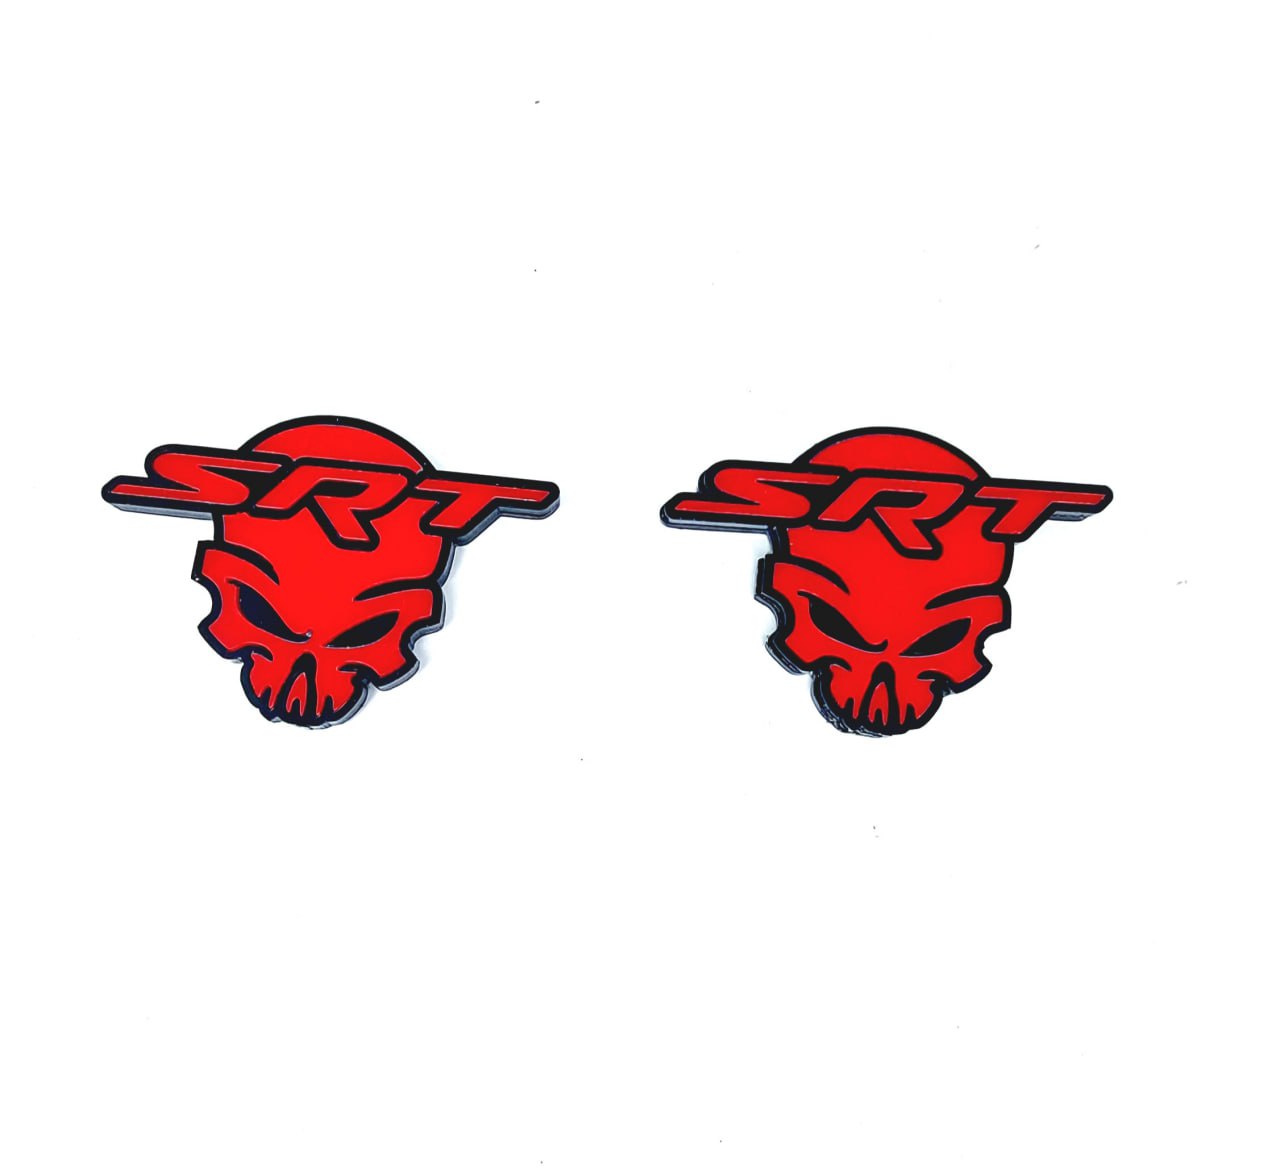 DODGE emblem for fenders with SRT Skull logo - decoinfabric